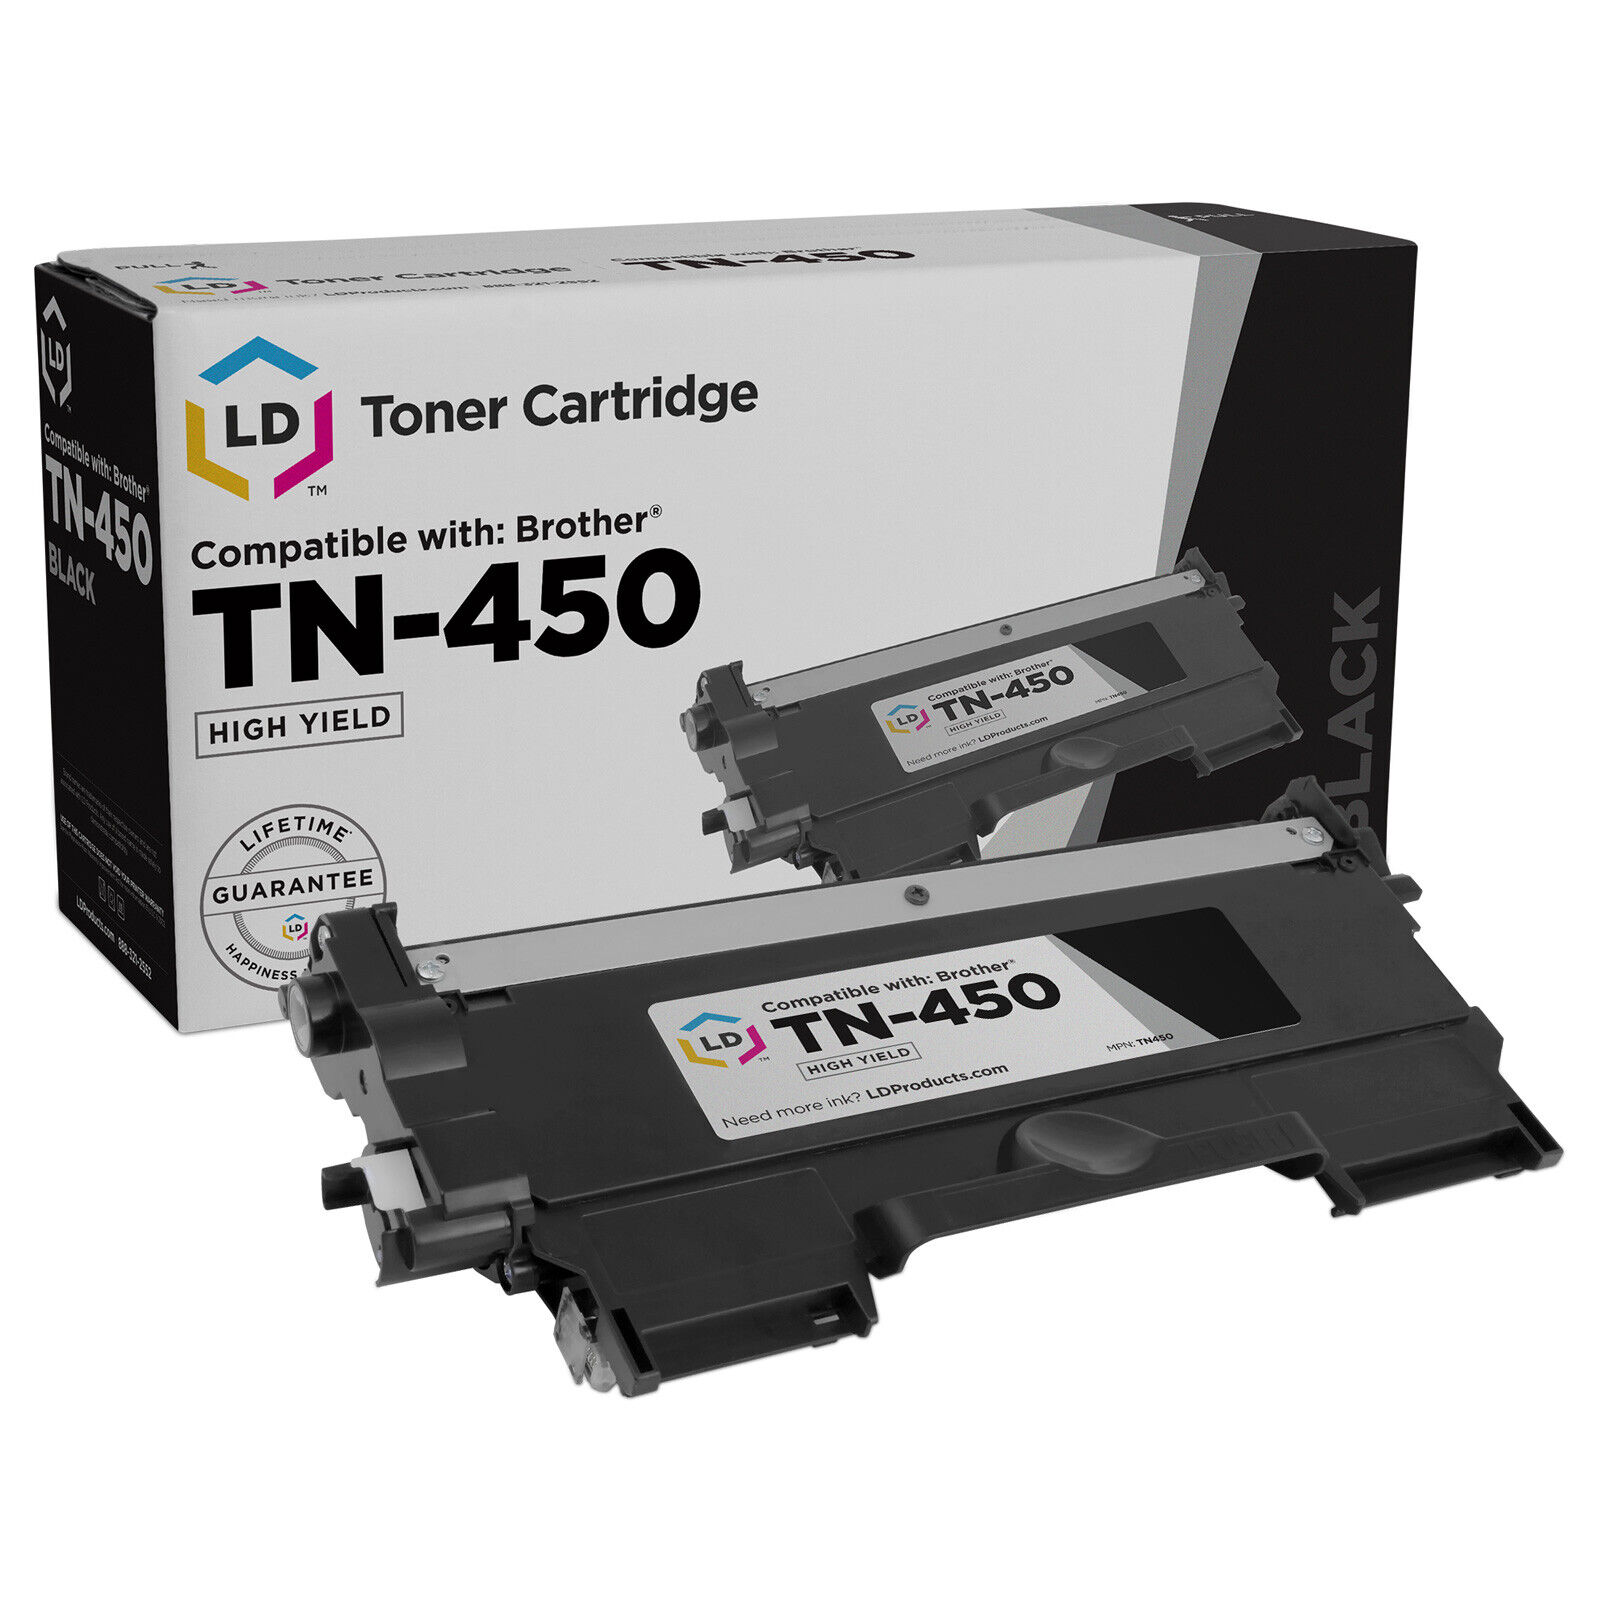 LD Toner Cartridge for Brother TN450 High Yield Black DCP-7065DN HL-2130 HL-2132